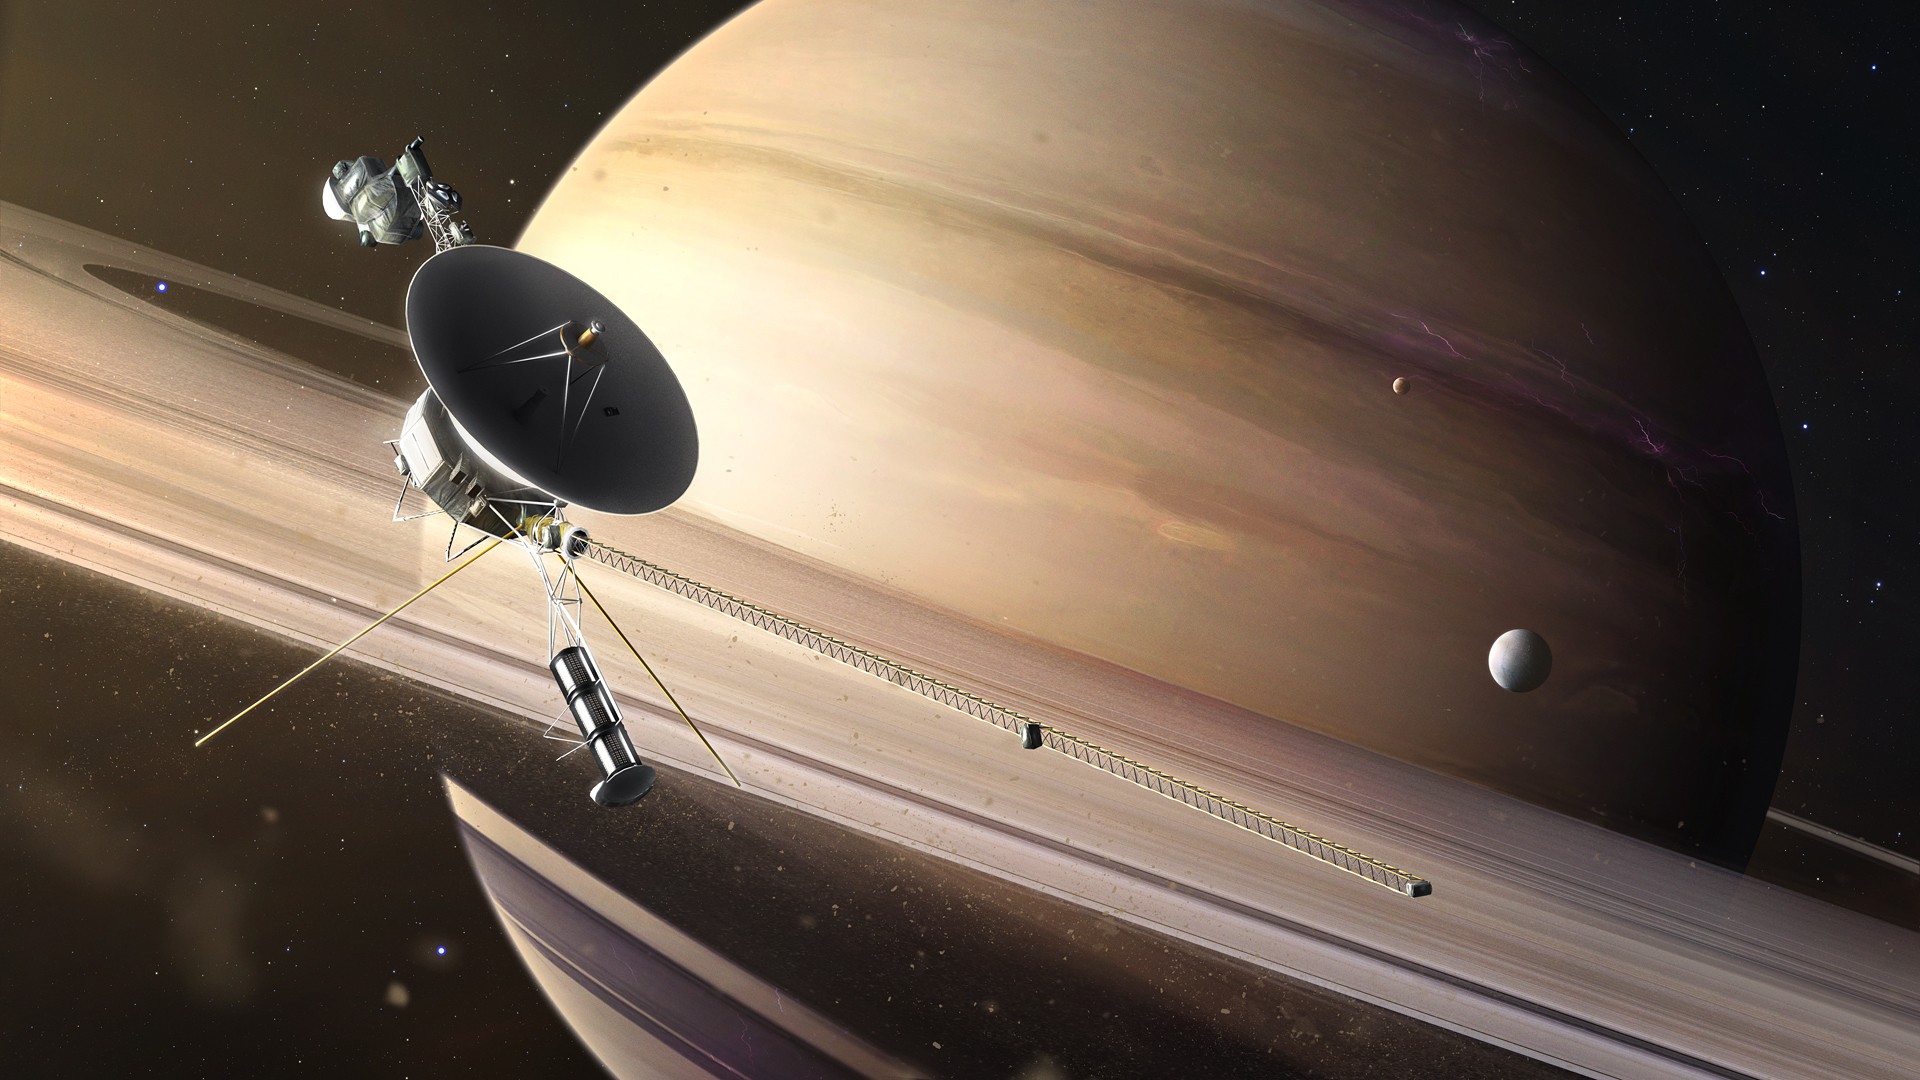 General 1920x1080 digital art CGI space universe planet stars Saturn satellite Moon technology Voyager